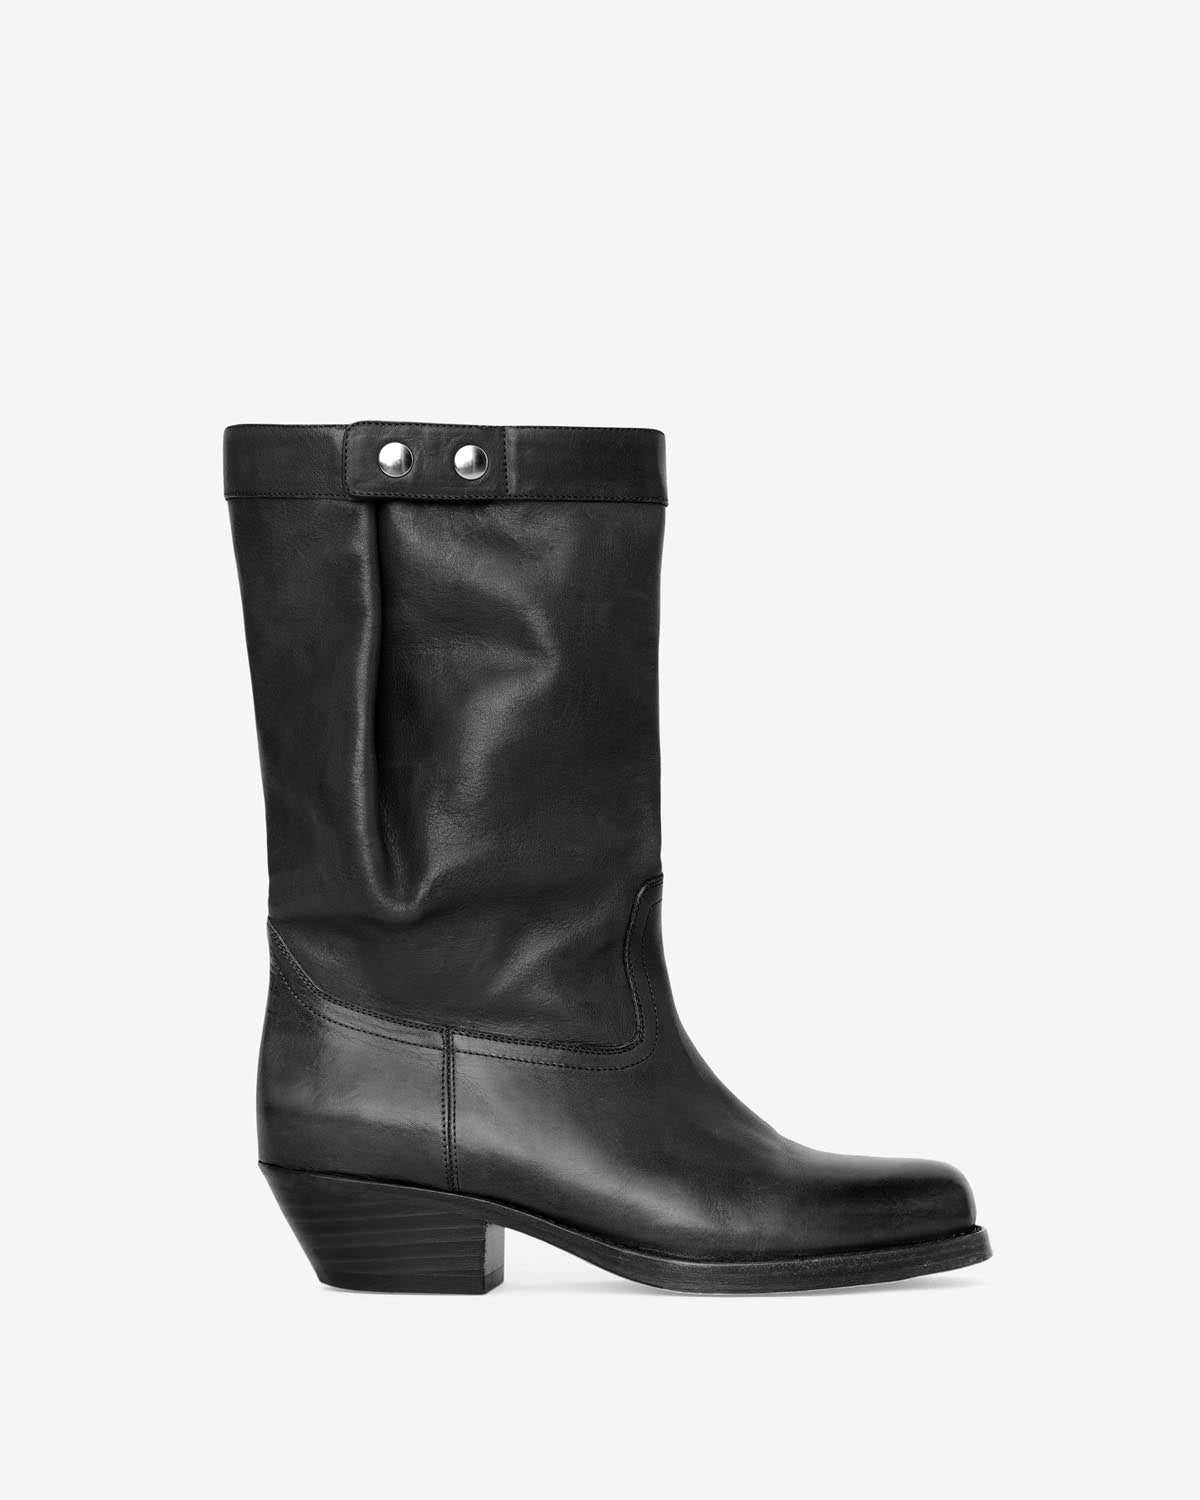 Ademe boots Woman Black 5